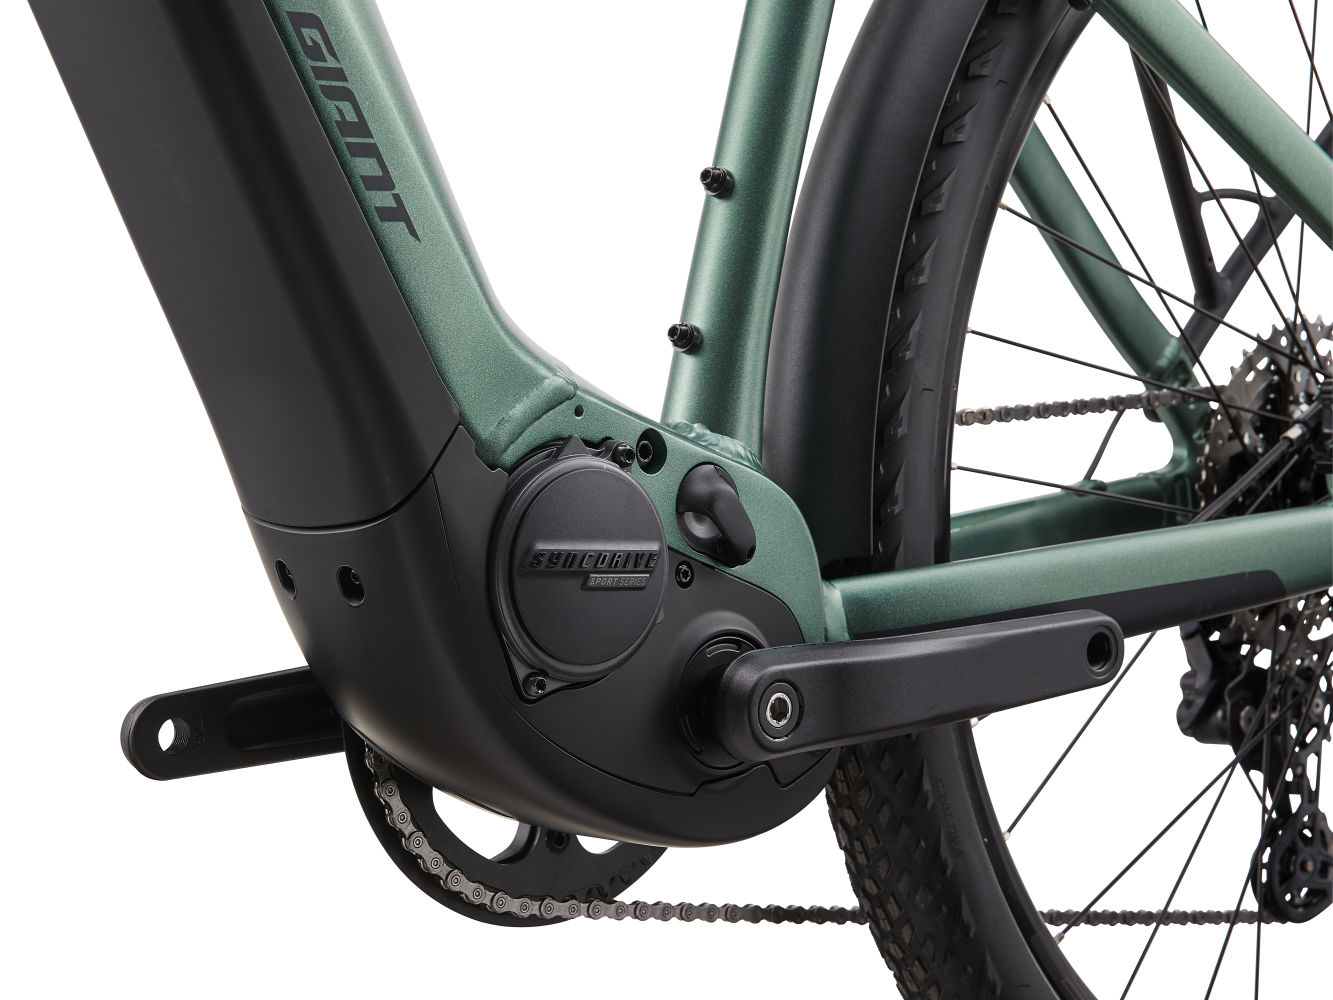 A close up view of a green Giant - Explore E+ 1 adventure bike.